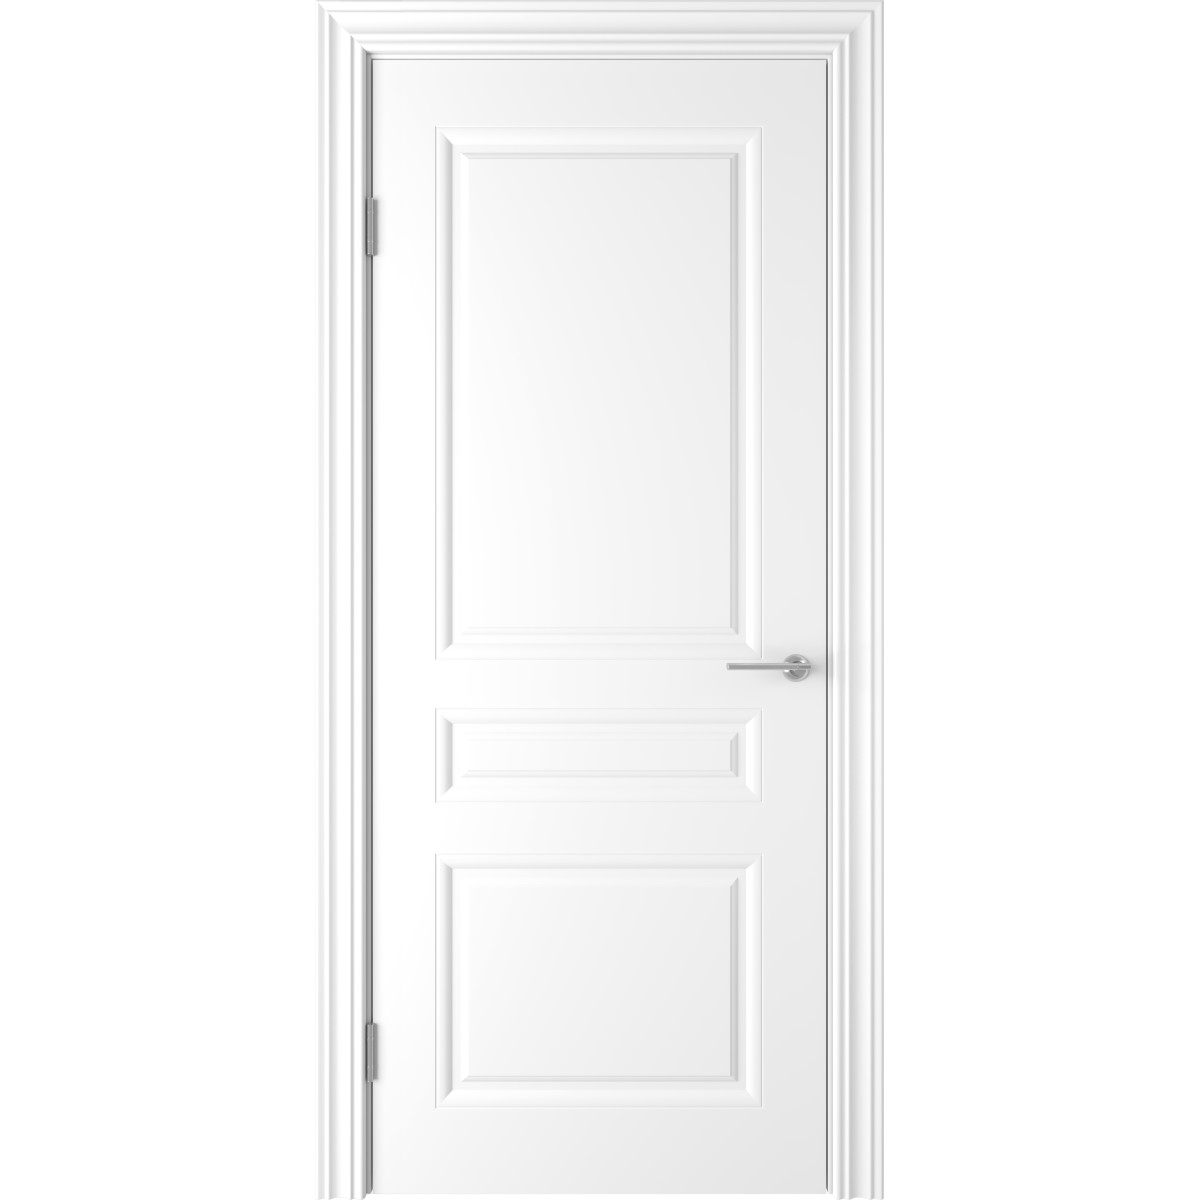 Дверь межкомнатная глухая Стелла, 90x200 см, эмаль, цвет белый